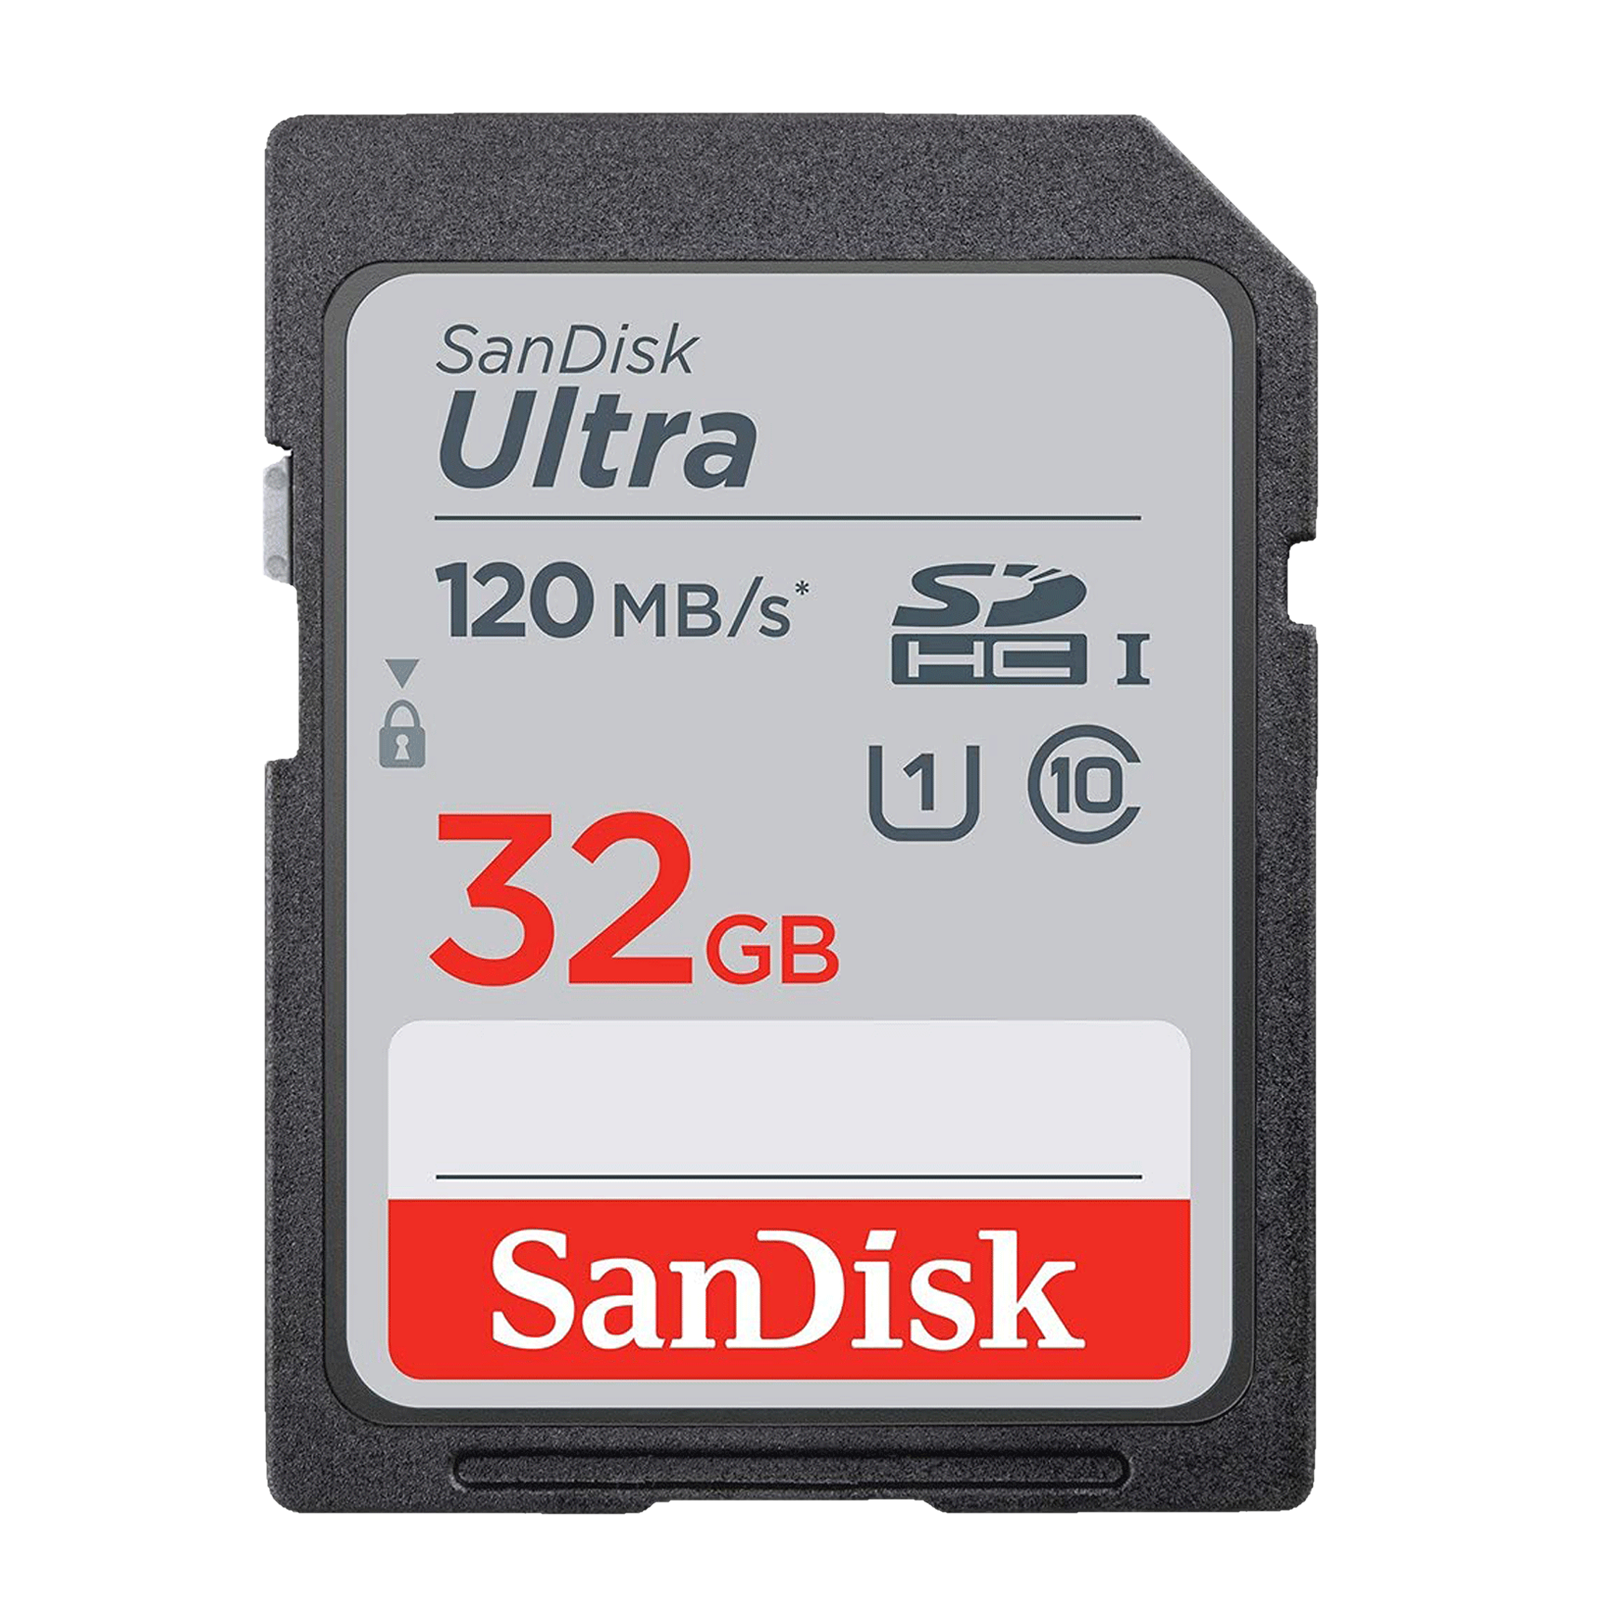 SanDisk Ultra SDXC 32GB Class 10 120MB/s Memory Card